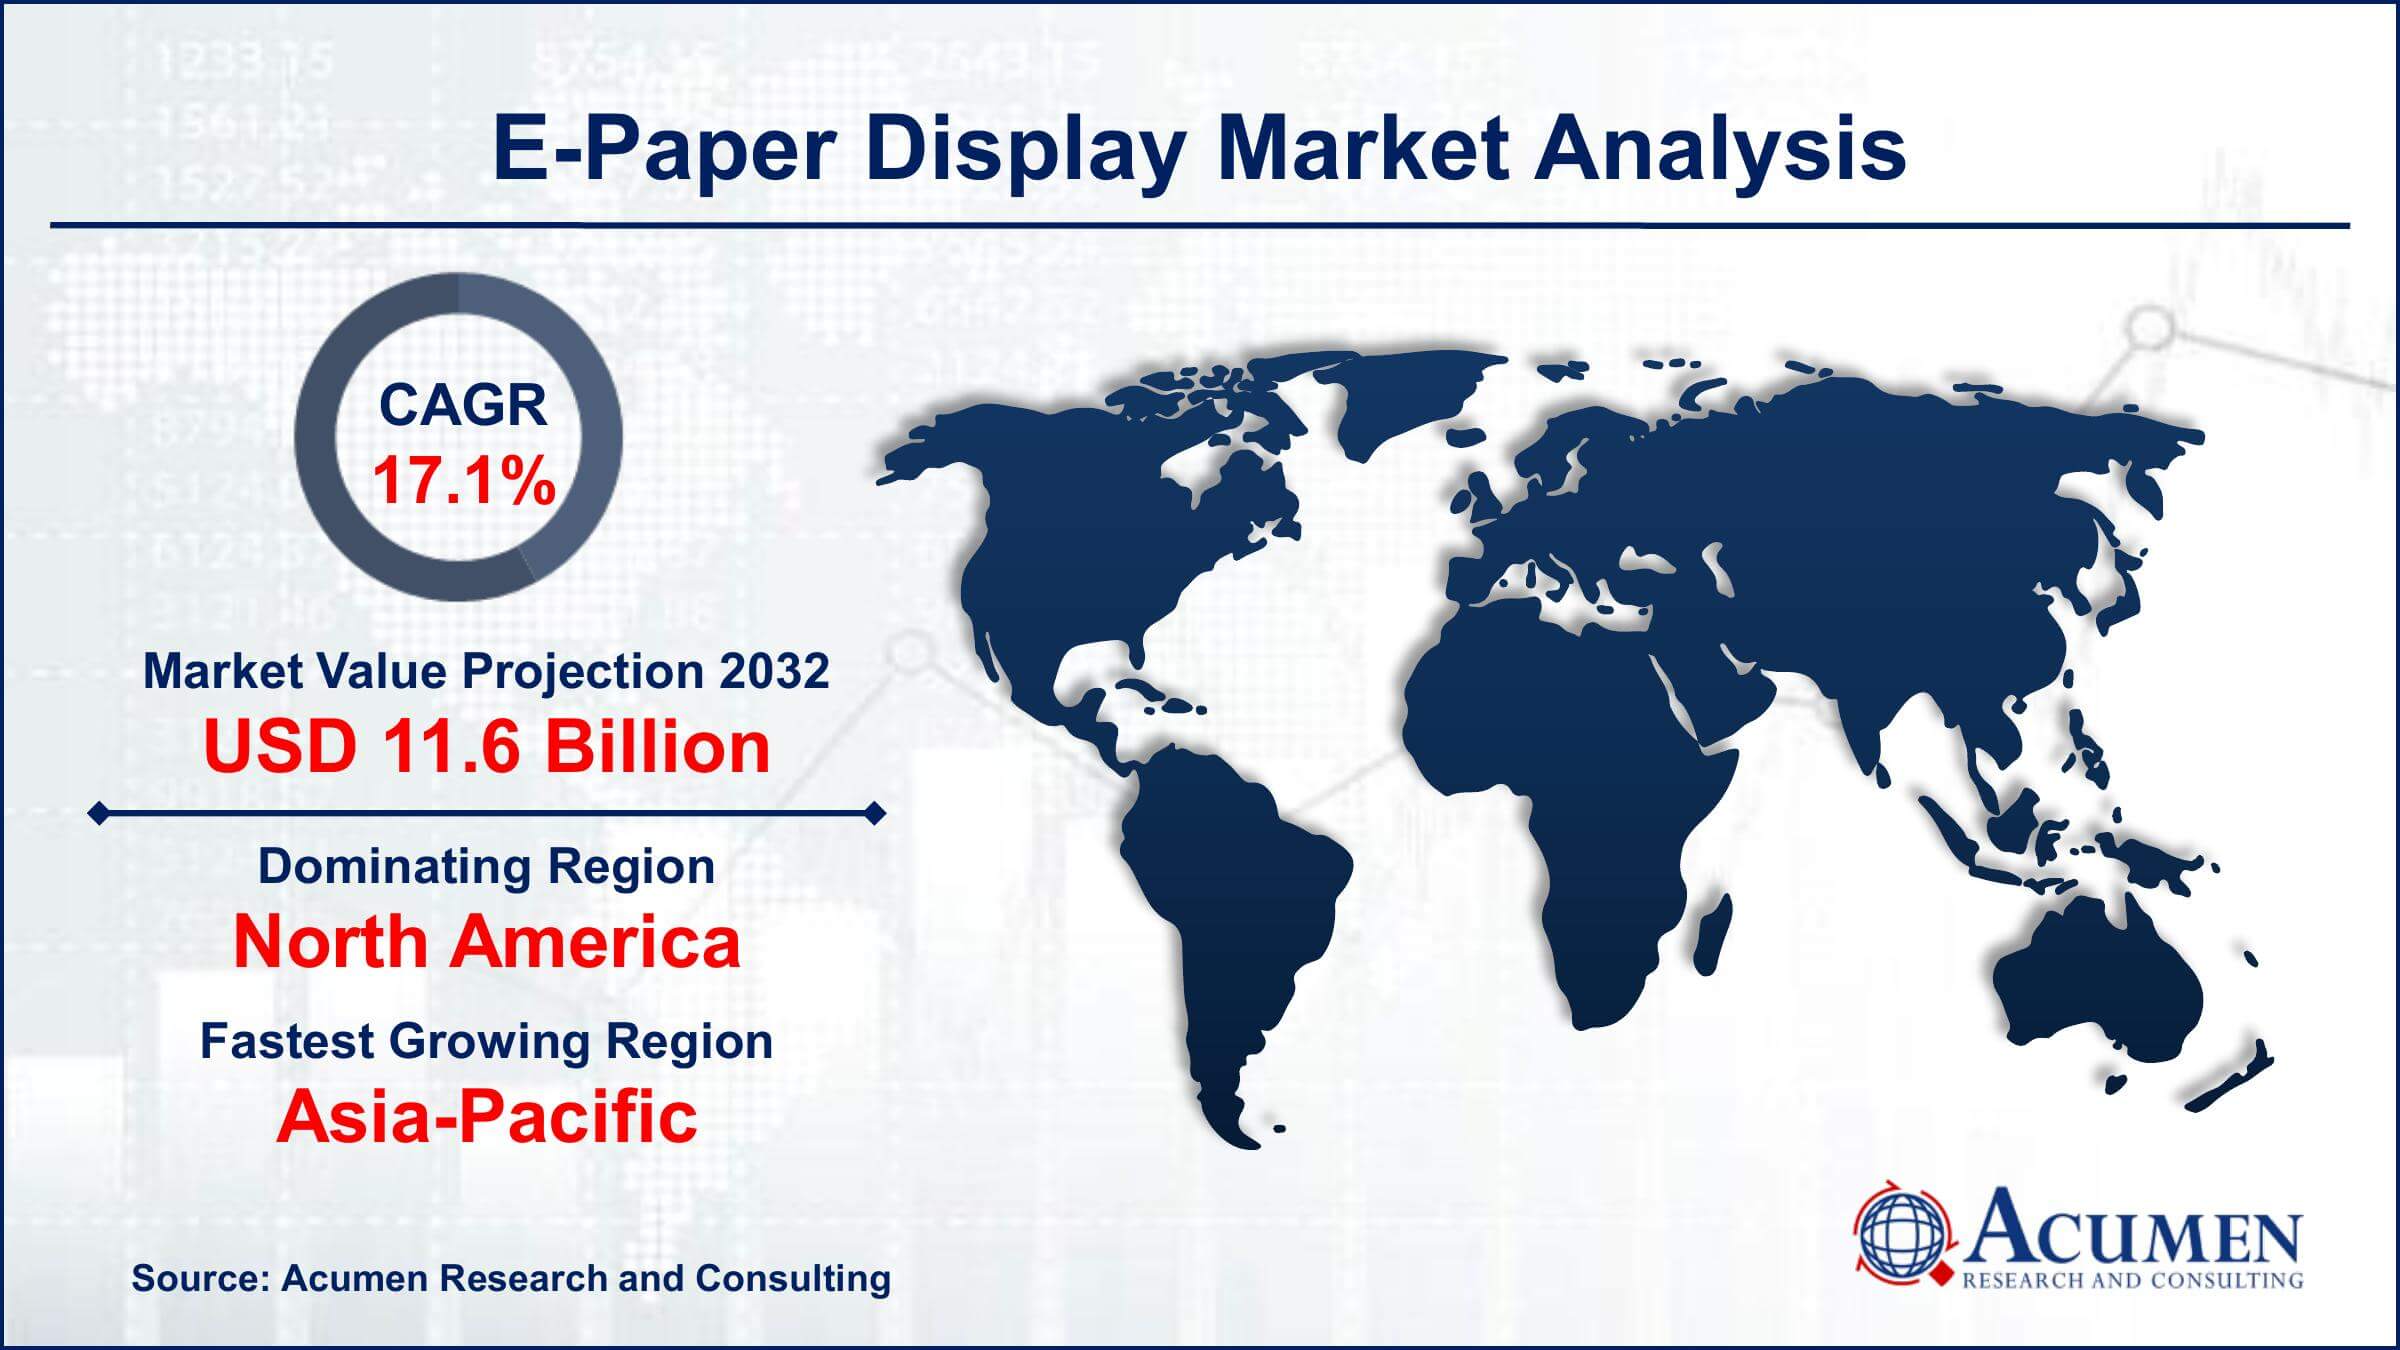 Global E-Paper Display Market Trends